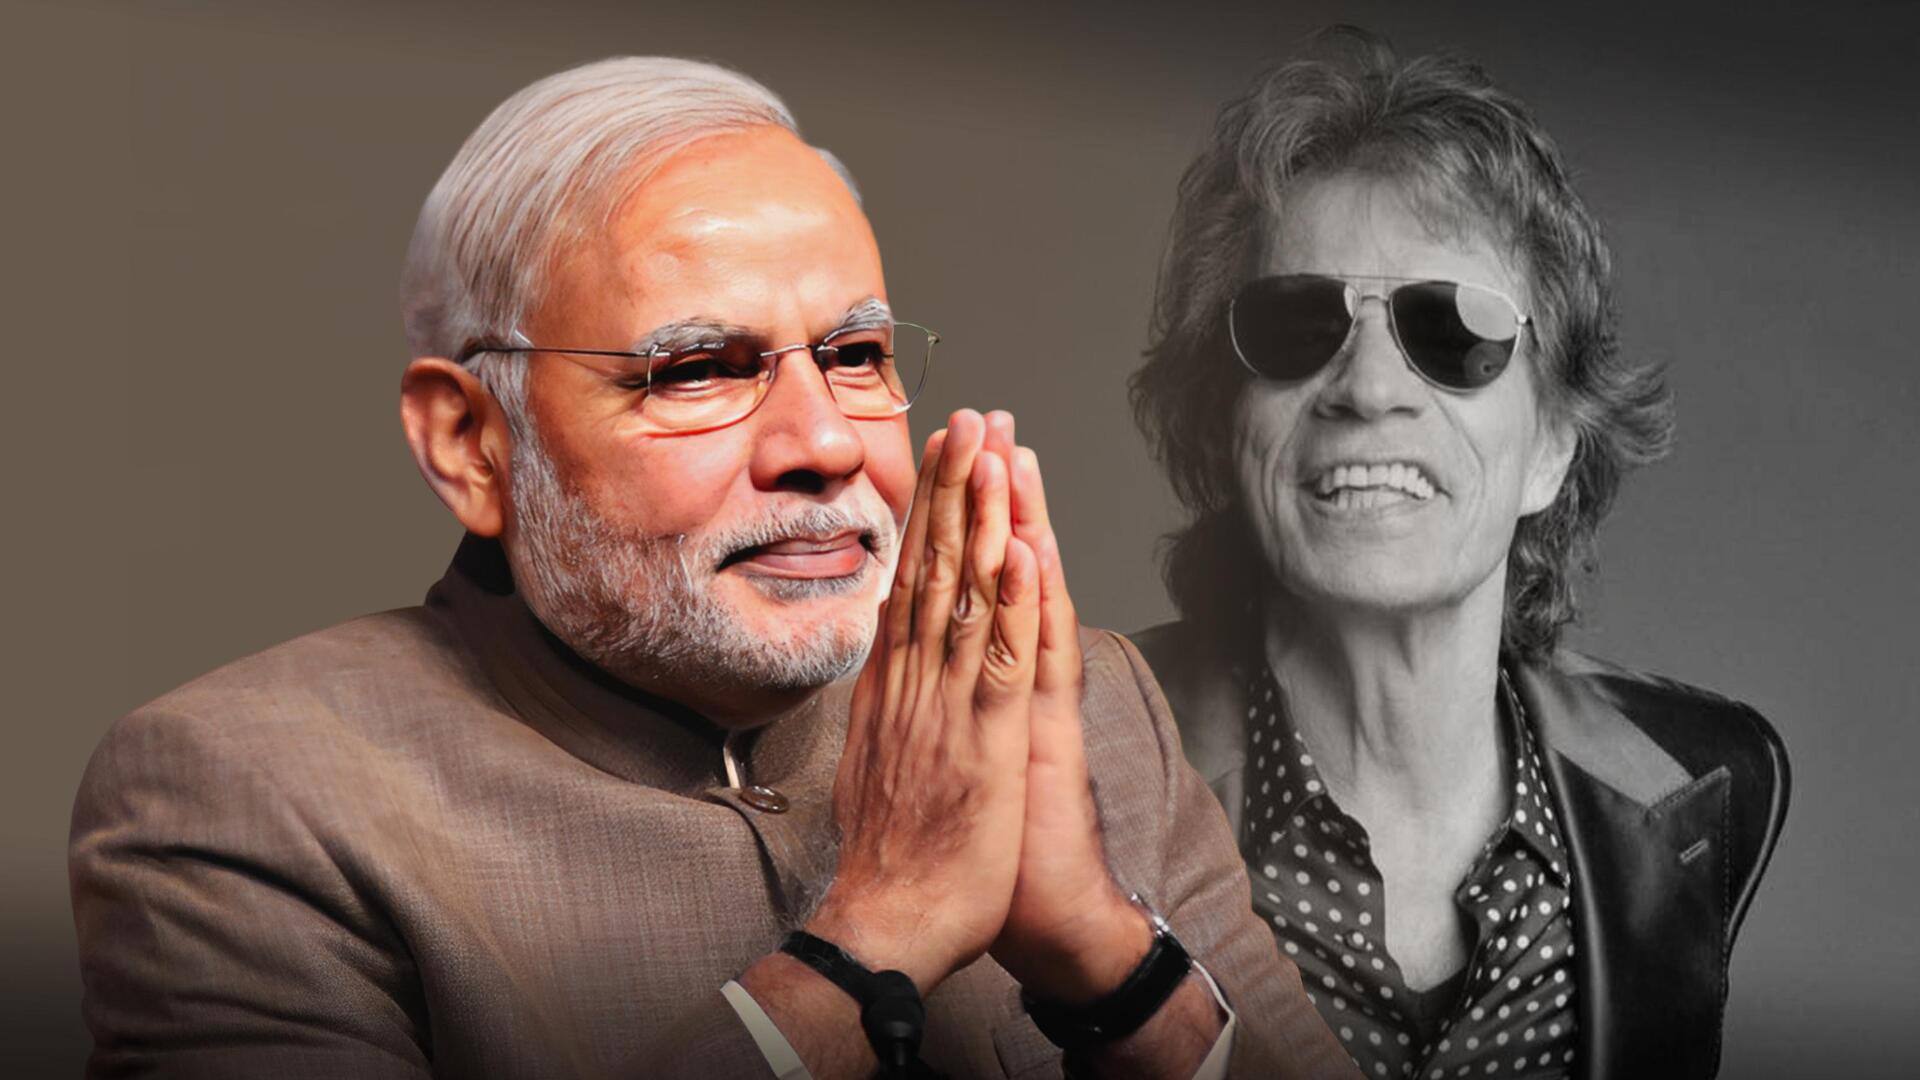 PM Modi responds to Mick Jagger's 'thanks India' tweet